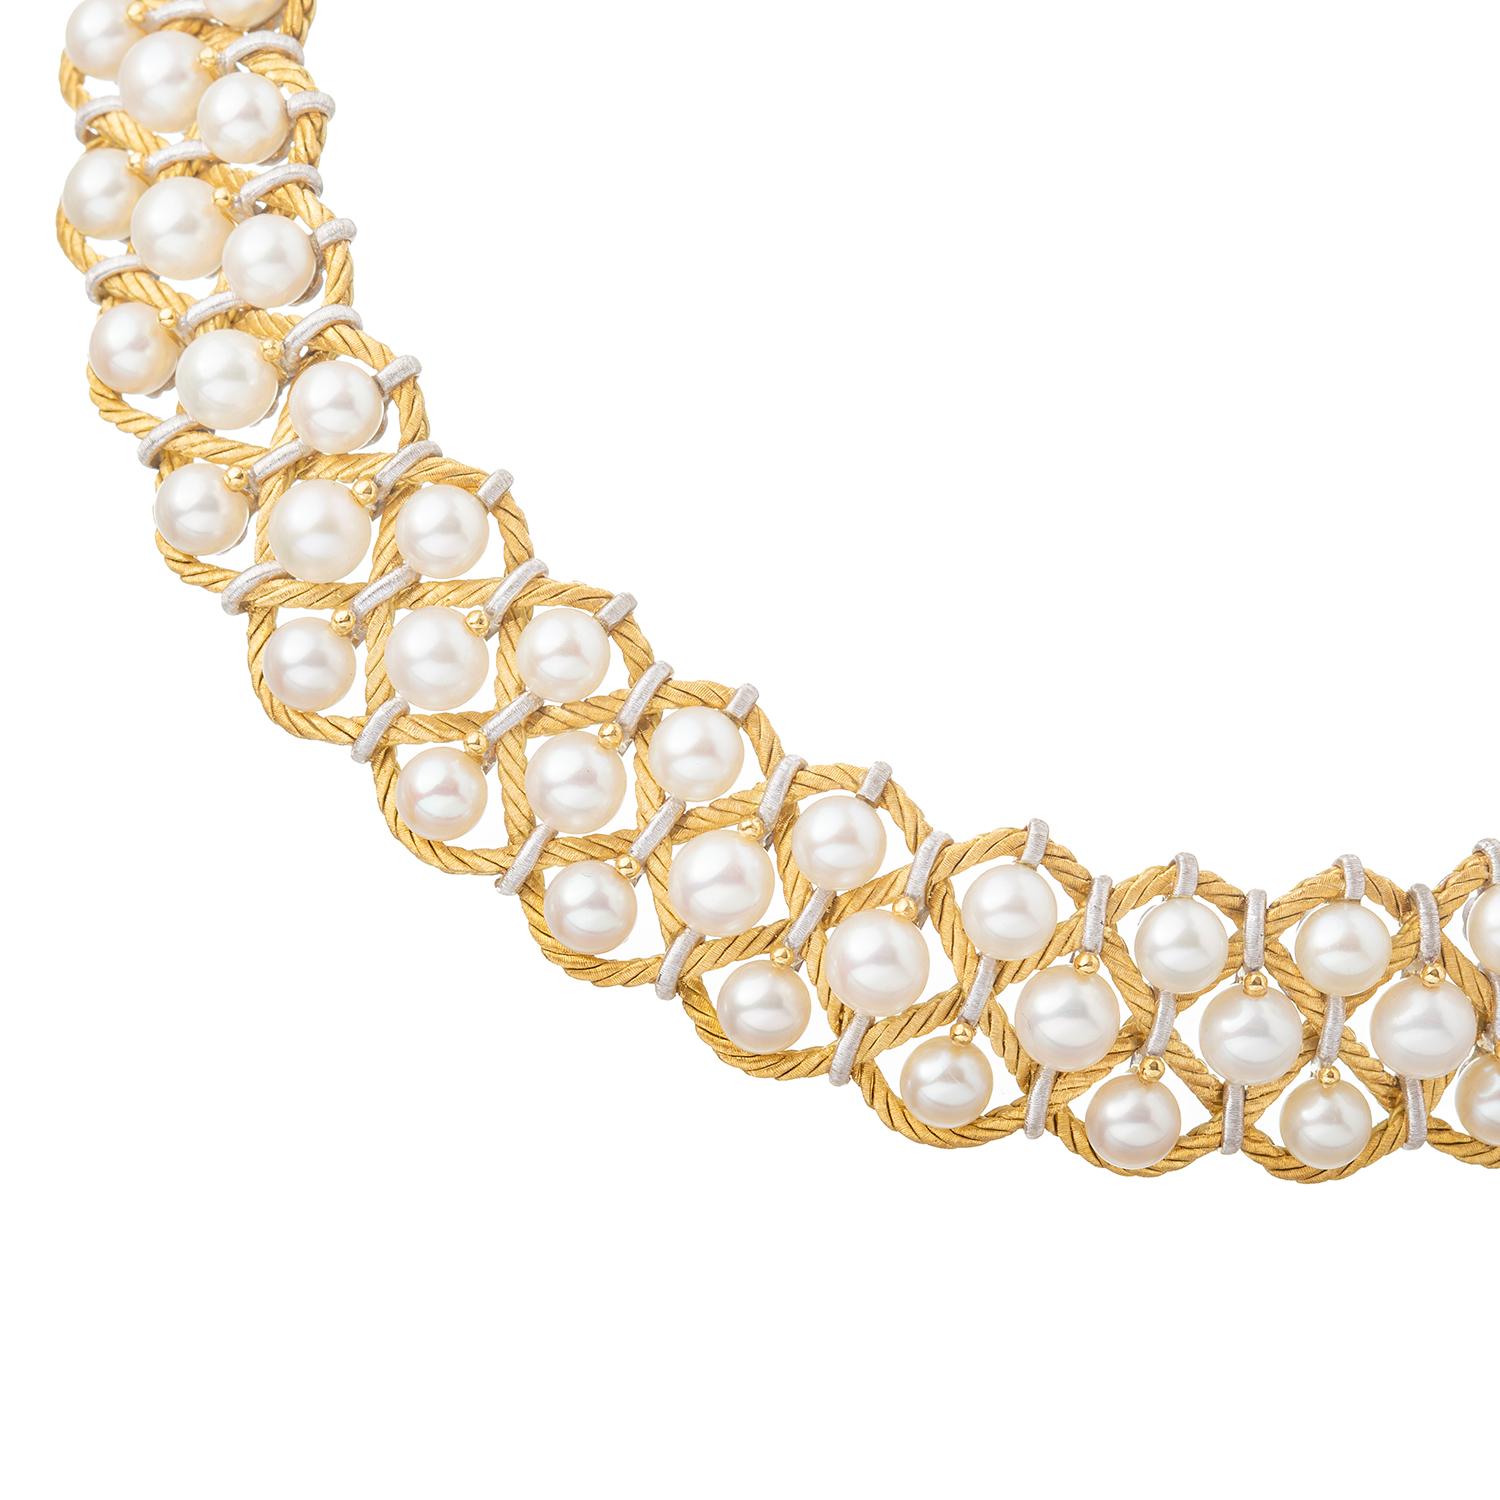 Ce collier de perles 